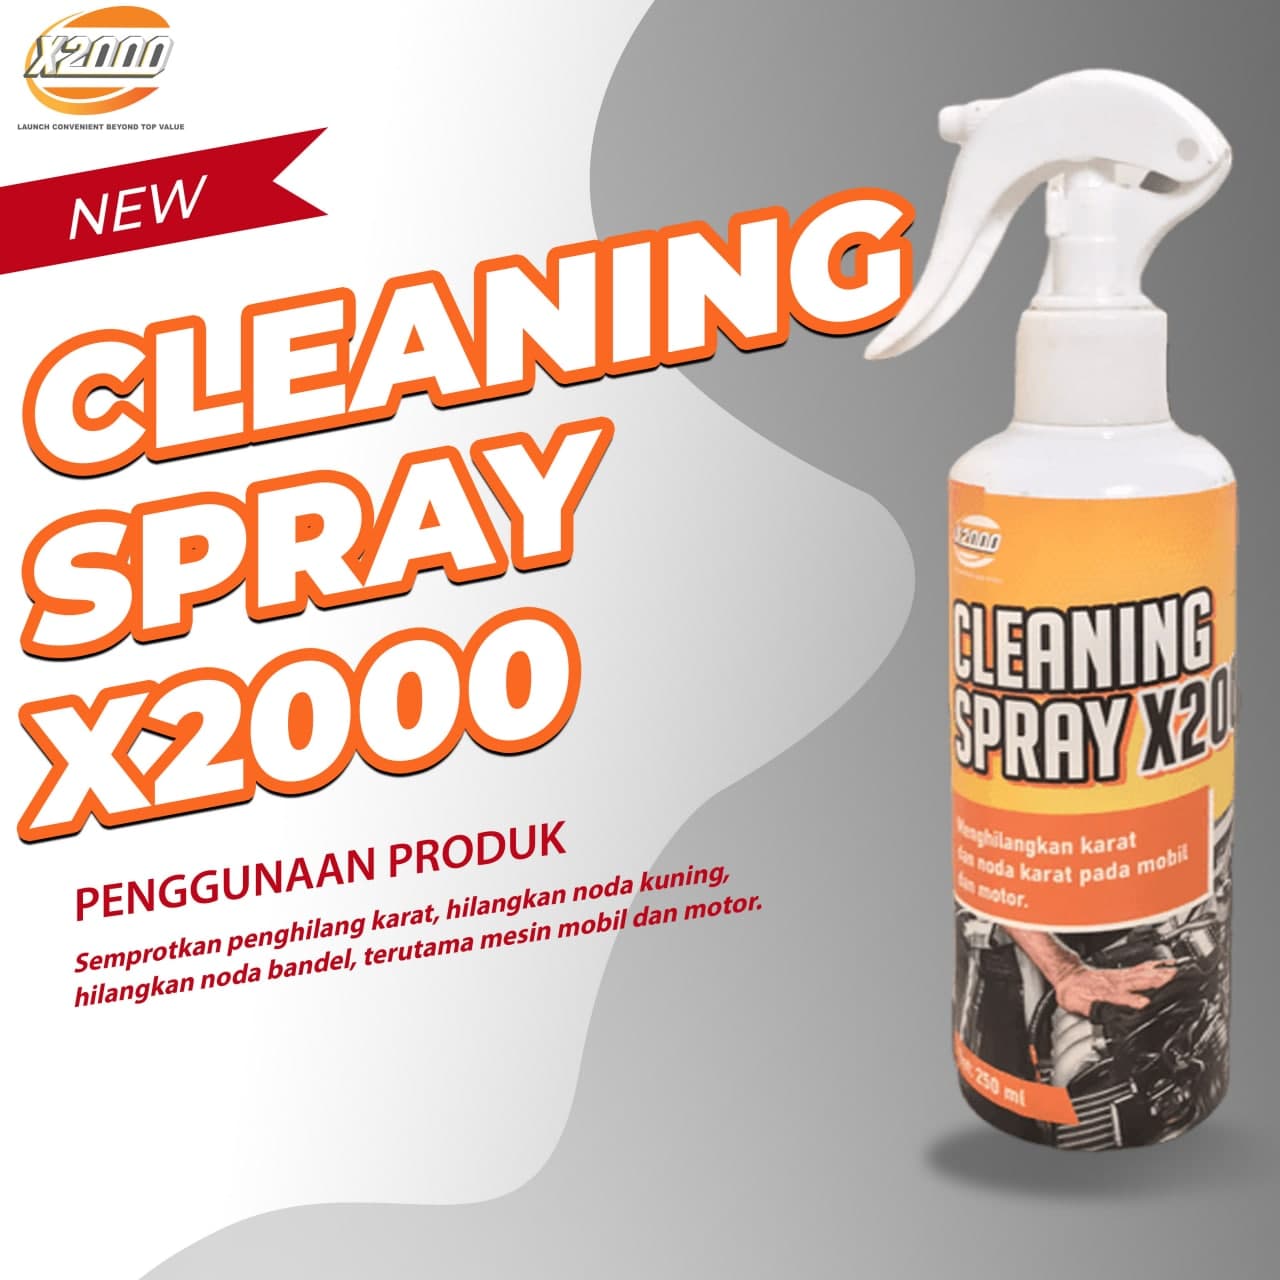 Pembersih karat X2000 serbaguna, Cleaning spray X2000, Menghilangkan karat,  minyak kotor, lumpur, noda jamur di jok kulit | Lazada Indonesia